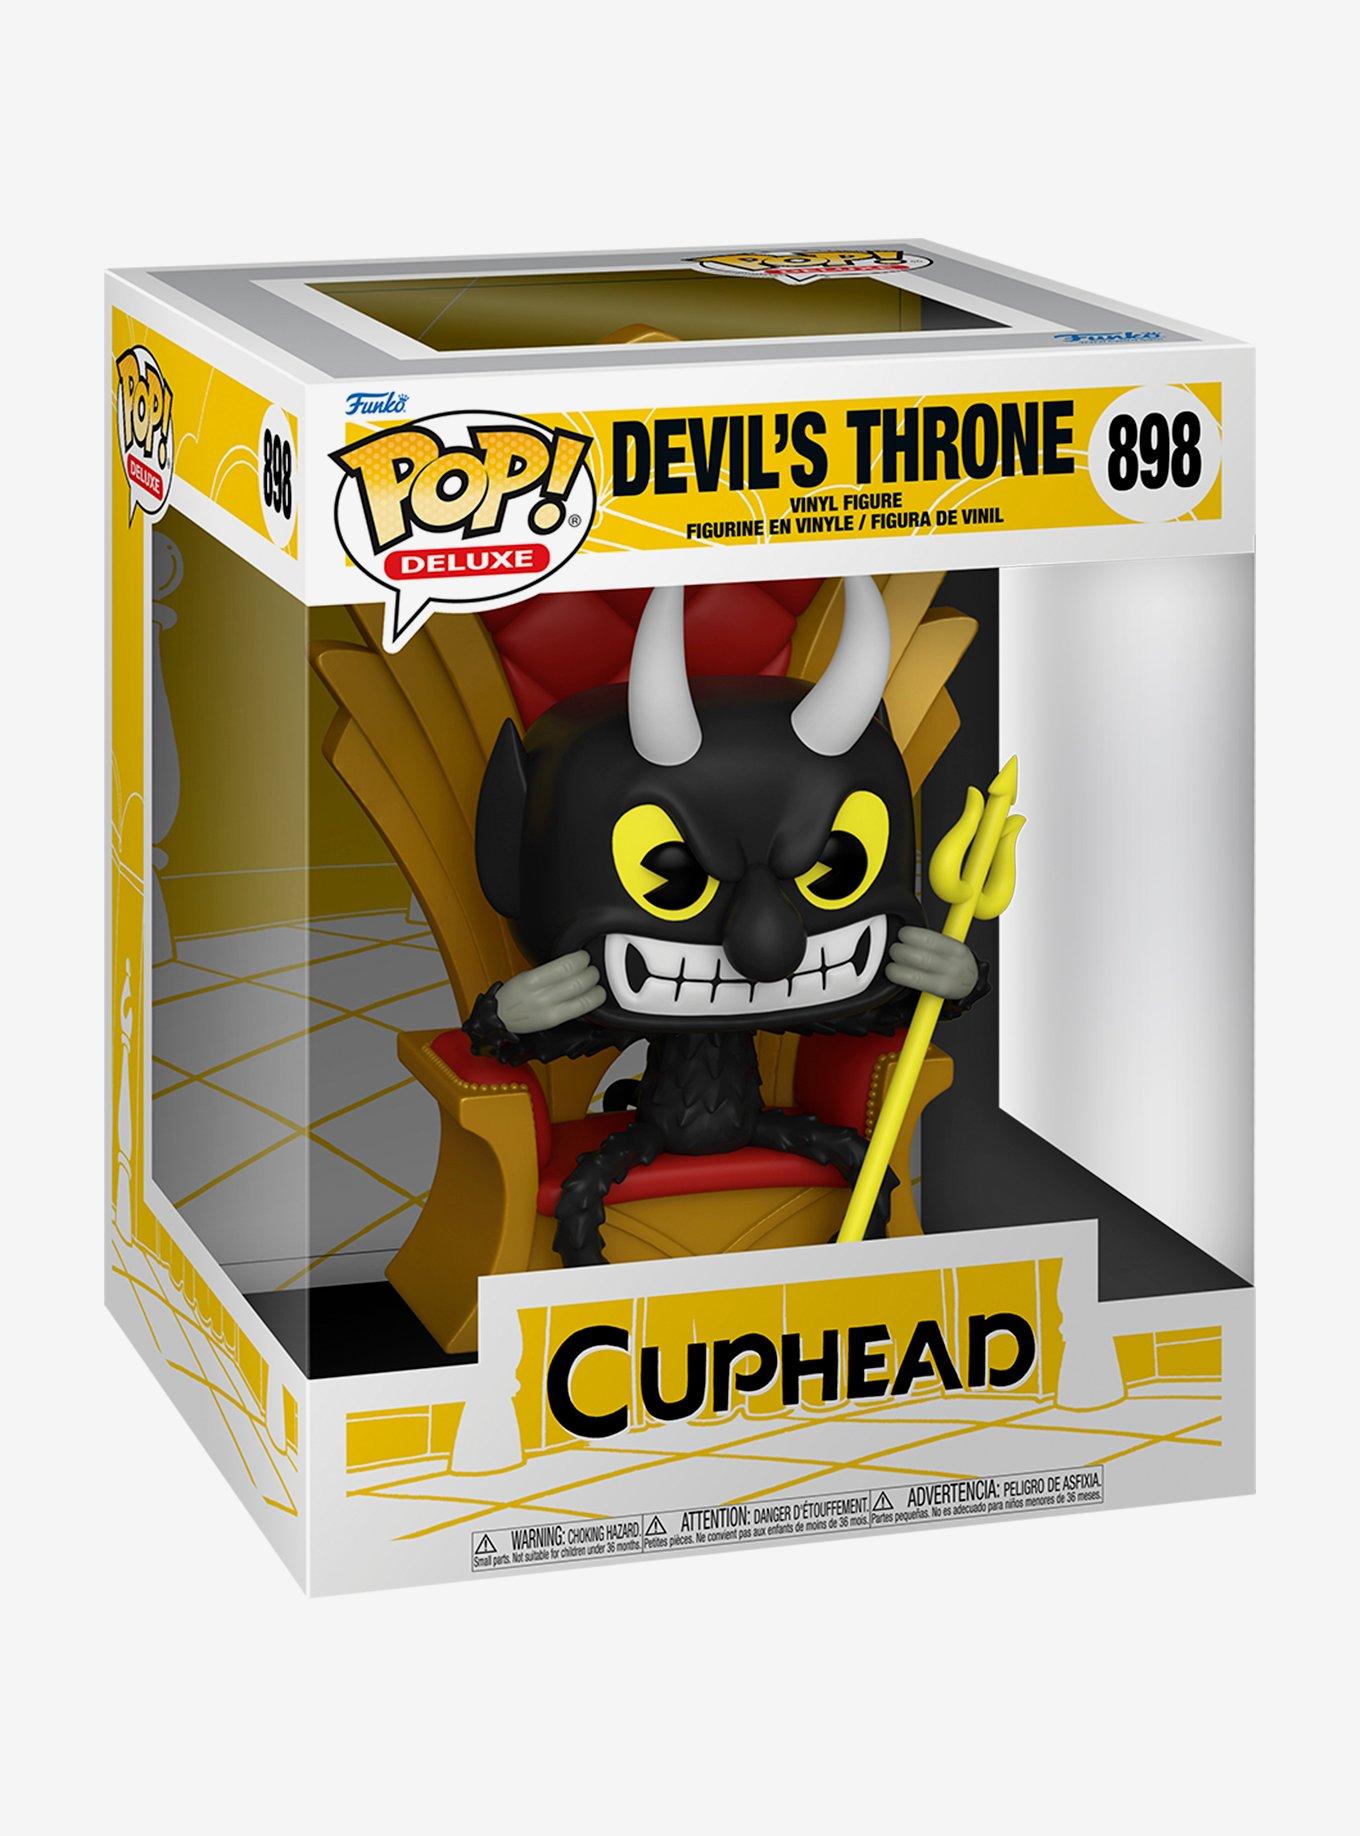 Funko Cuphead Pop! Deluxe Devil's Throne Vinyl Figure